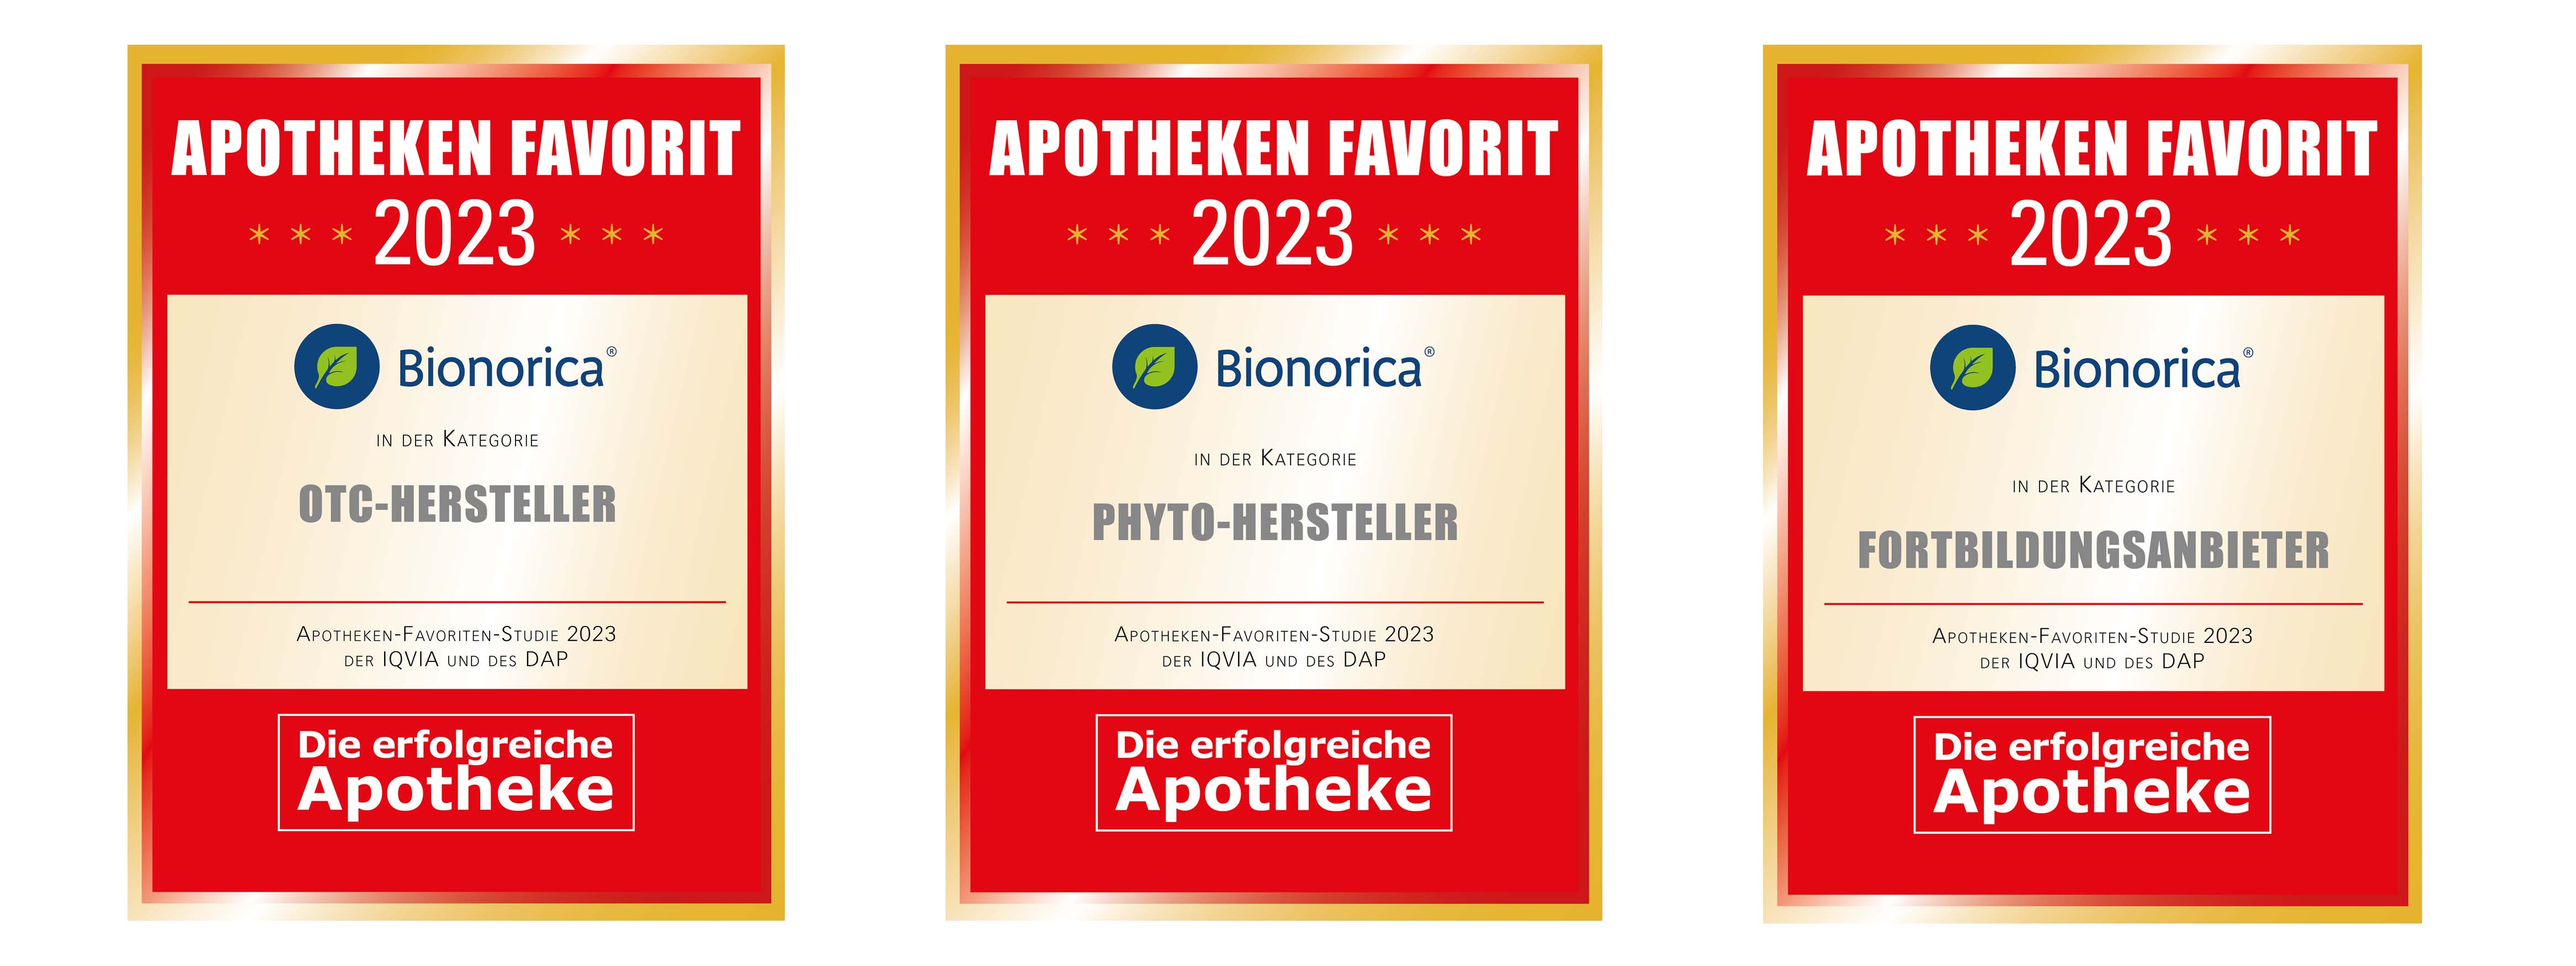 "Pharmacy Favourite 2023" in Germany: Bionorica is 3-time winner